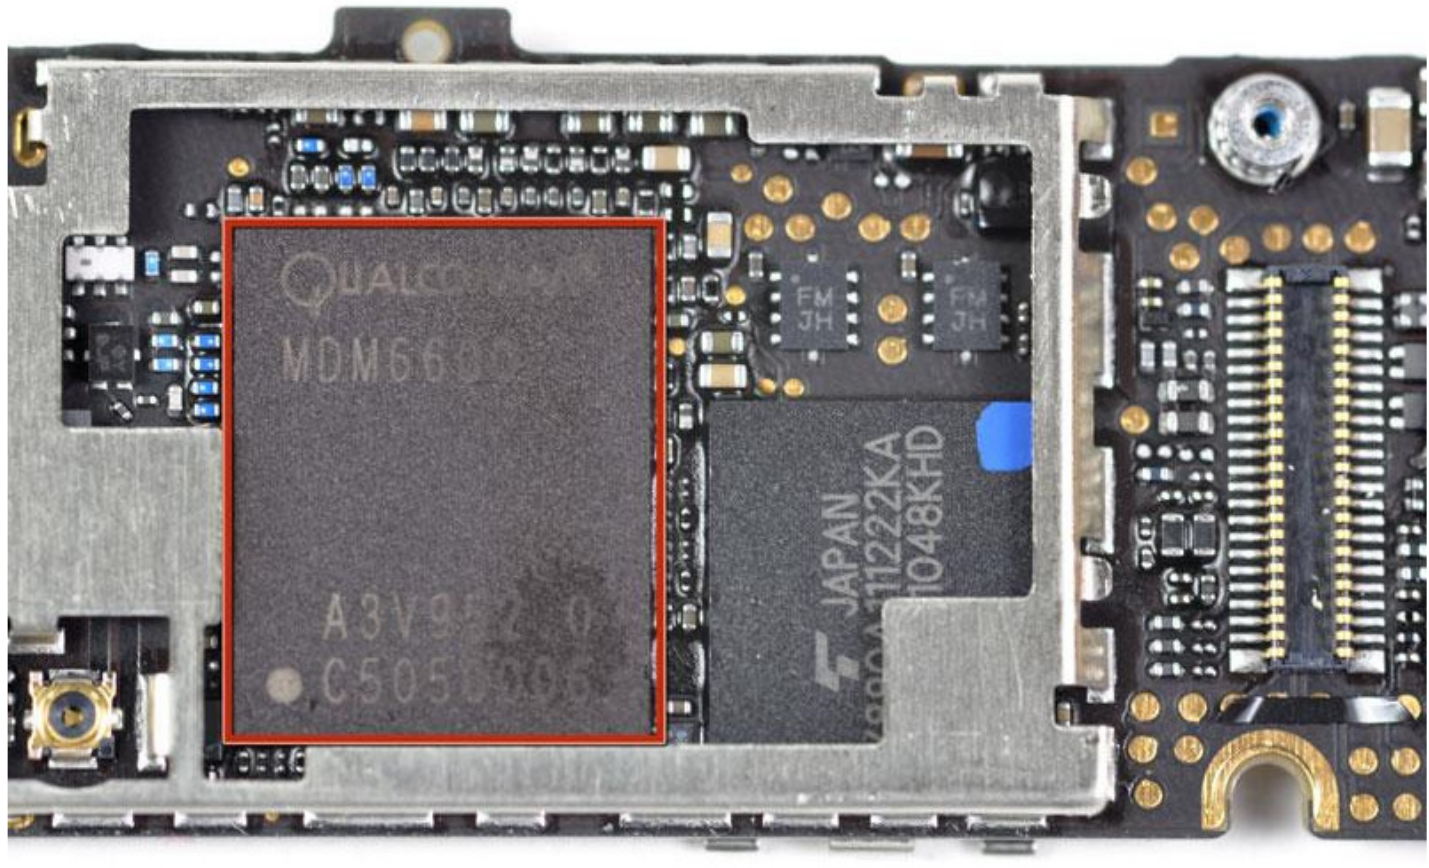 Чип Qualcomm MDM6600 на плате Apple iPhone 4 версии CDMA (источник ifixit.com)